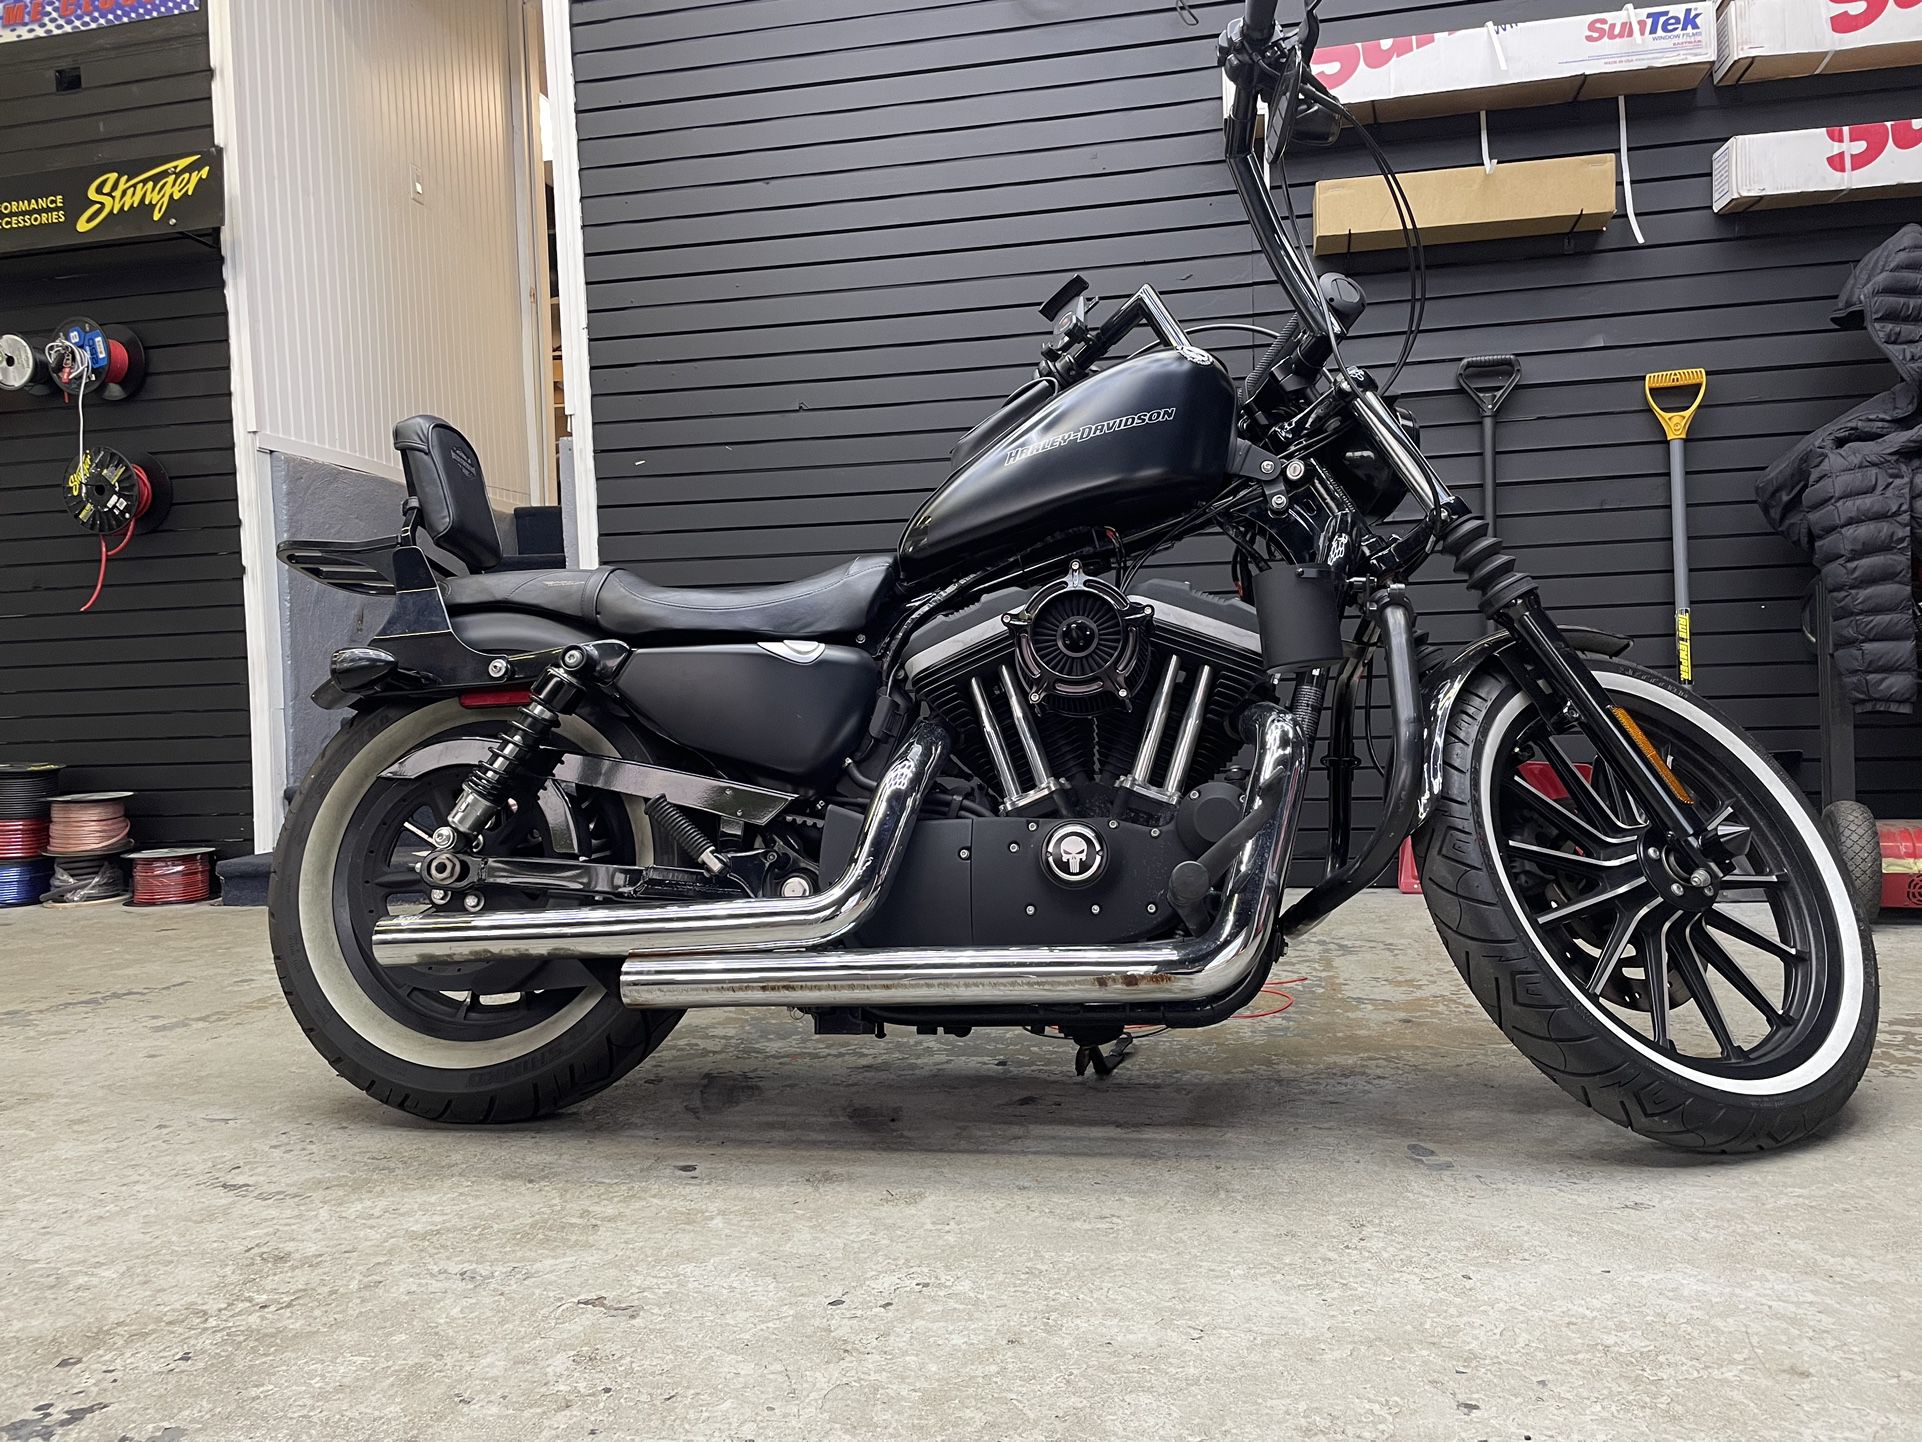 2010 Harley sportster iron 883